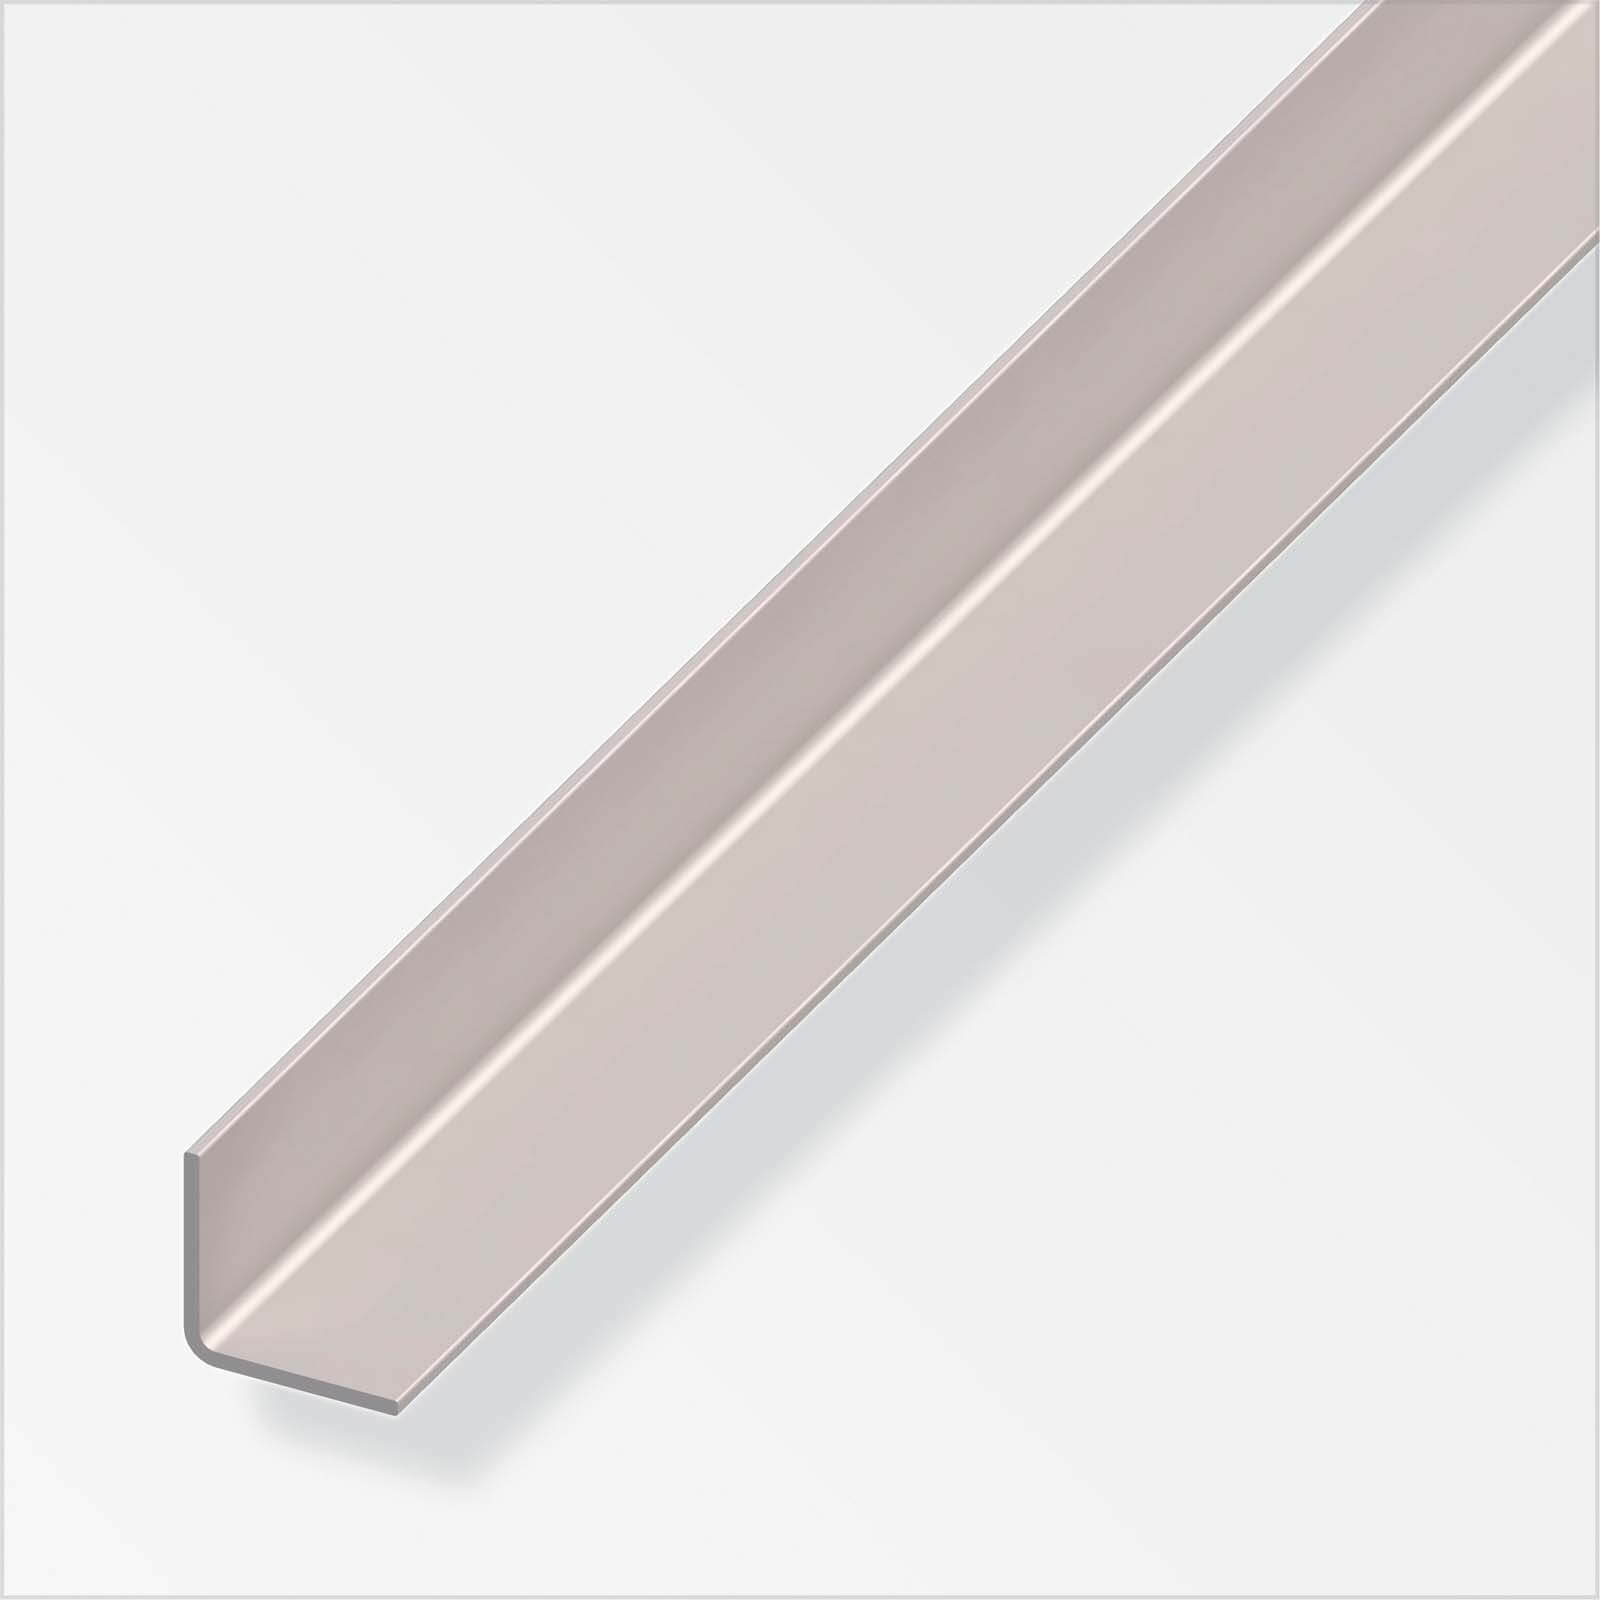 Photo of Cr Steel Equal Angle Profile - 1m X 20 X 20mm